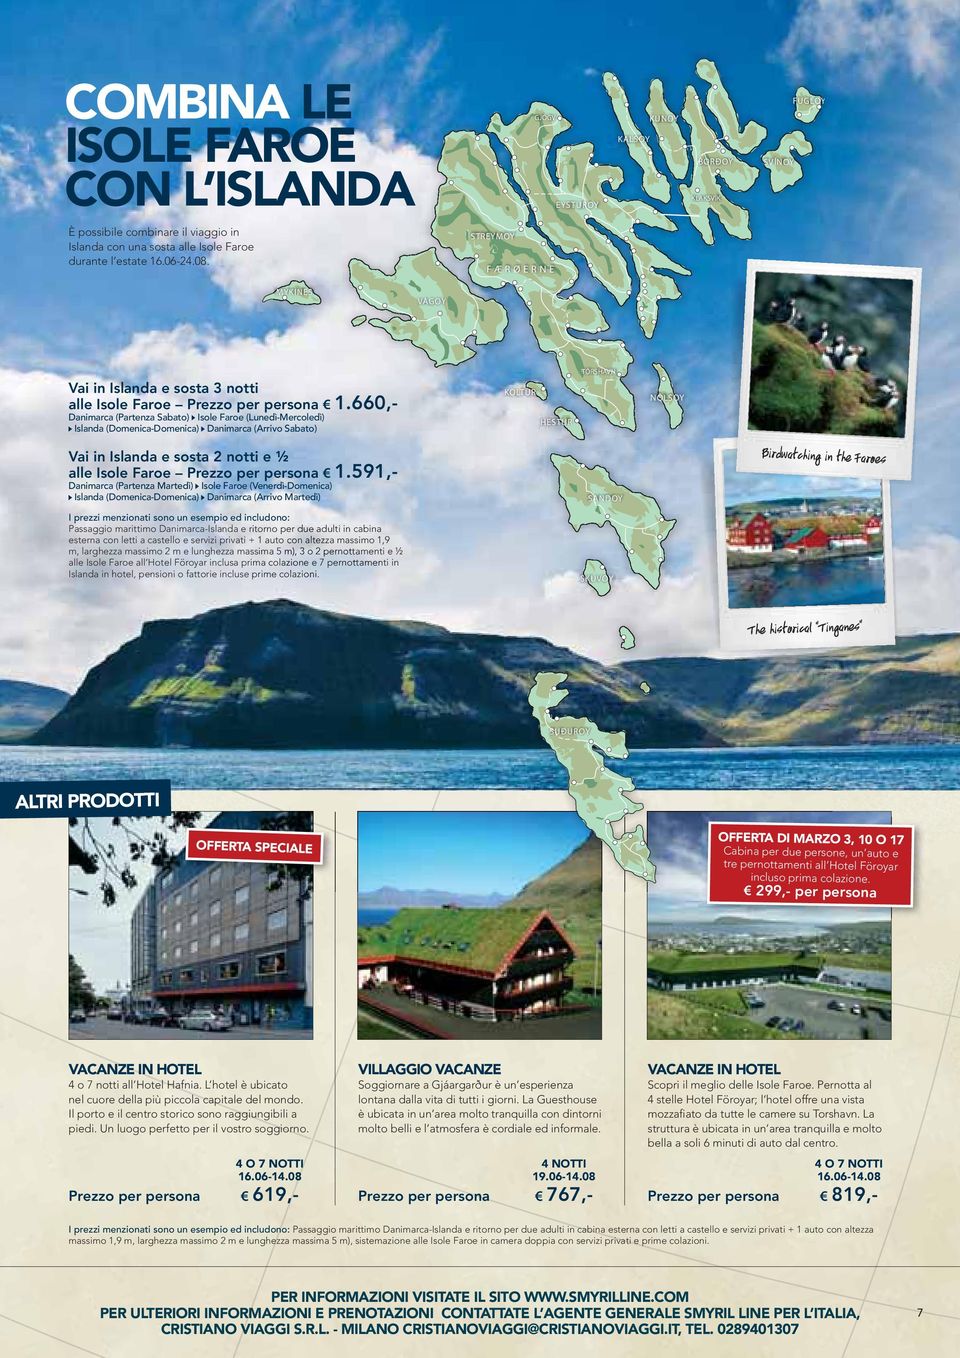 660,Danimarca (Partenza Sabato) Isole Faroe (Lunedì-Mercoledì) Luned dì-mercoledì) Islanda (Domenica-Domenica) Danimarca (Arrivo (Arrivvo Sabato) KOLTUR NÓLSOY HESTUR Birdwatching in the Faroes Vai